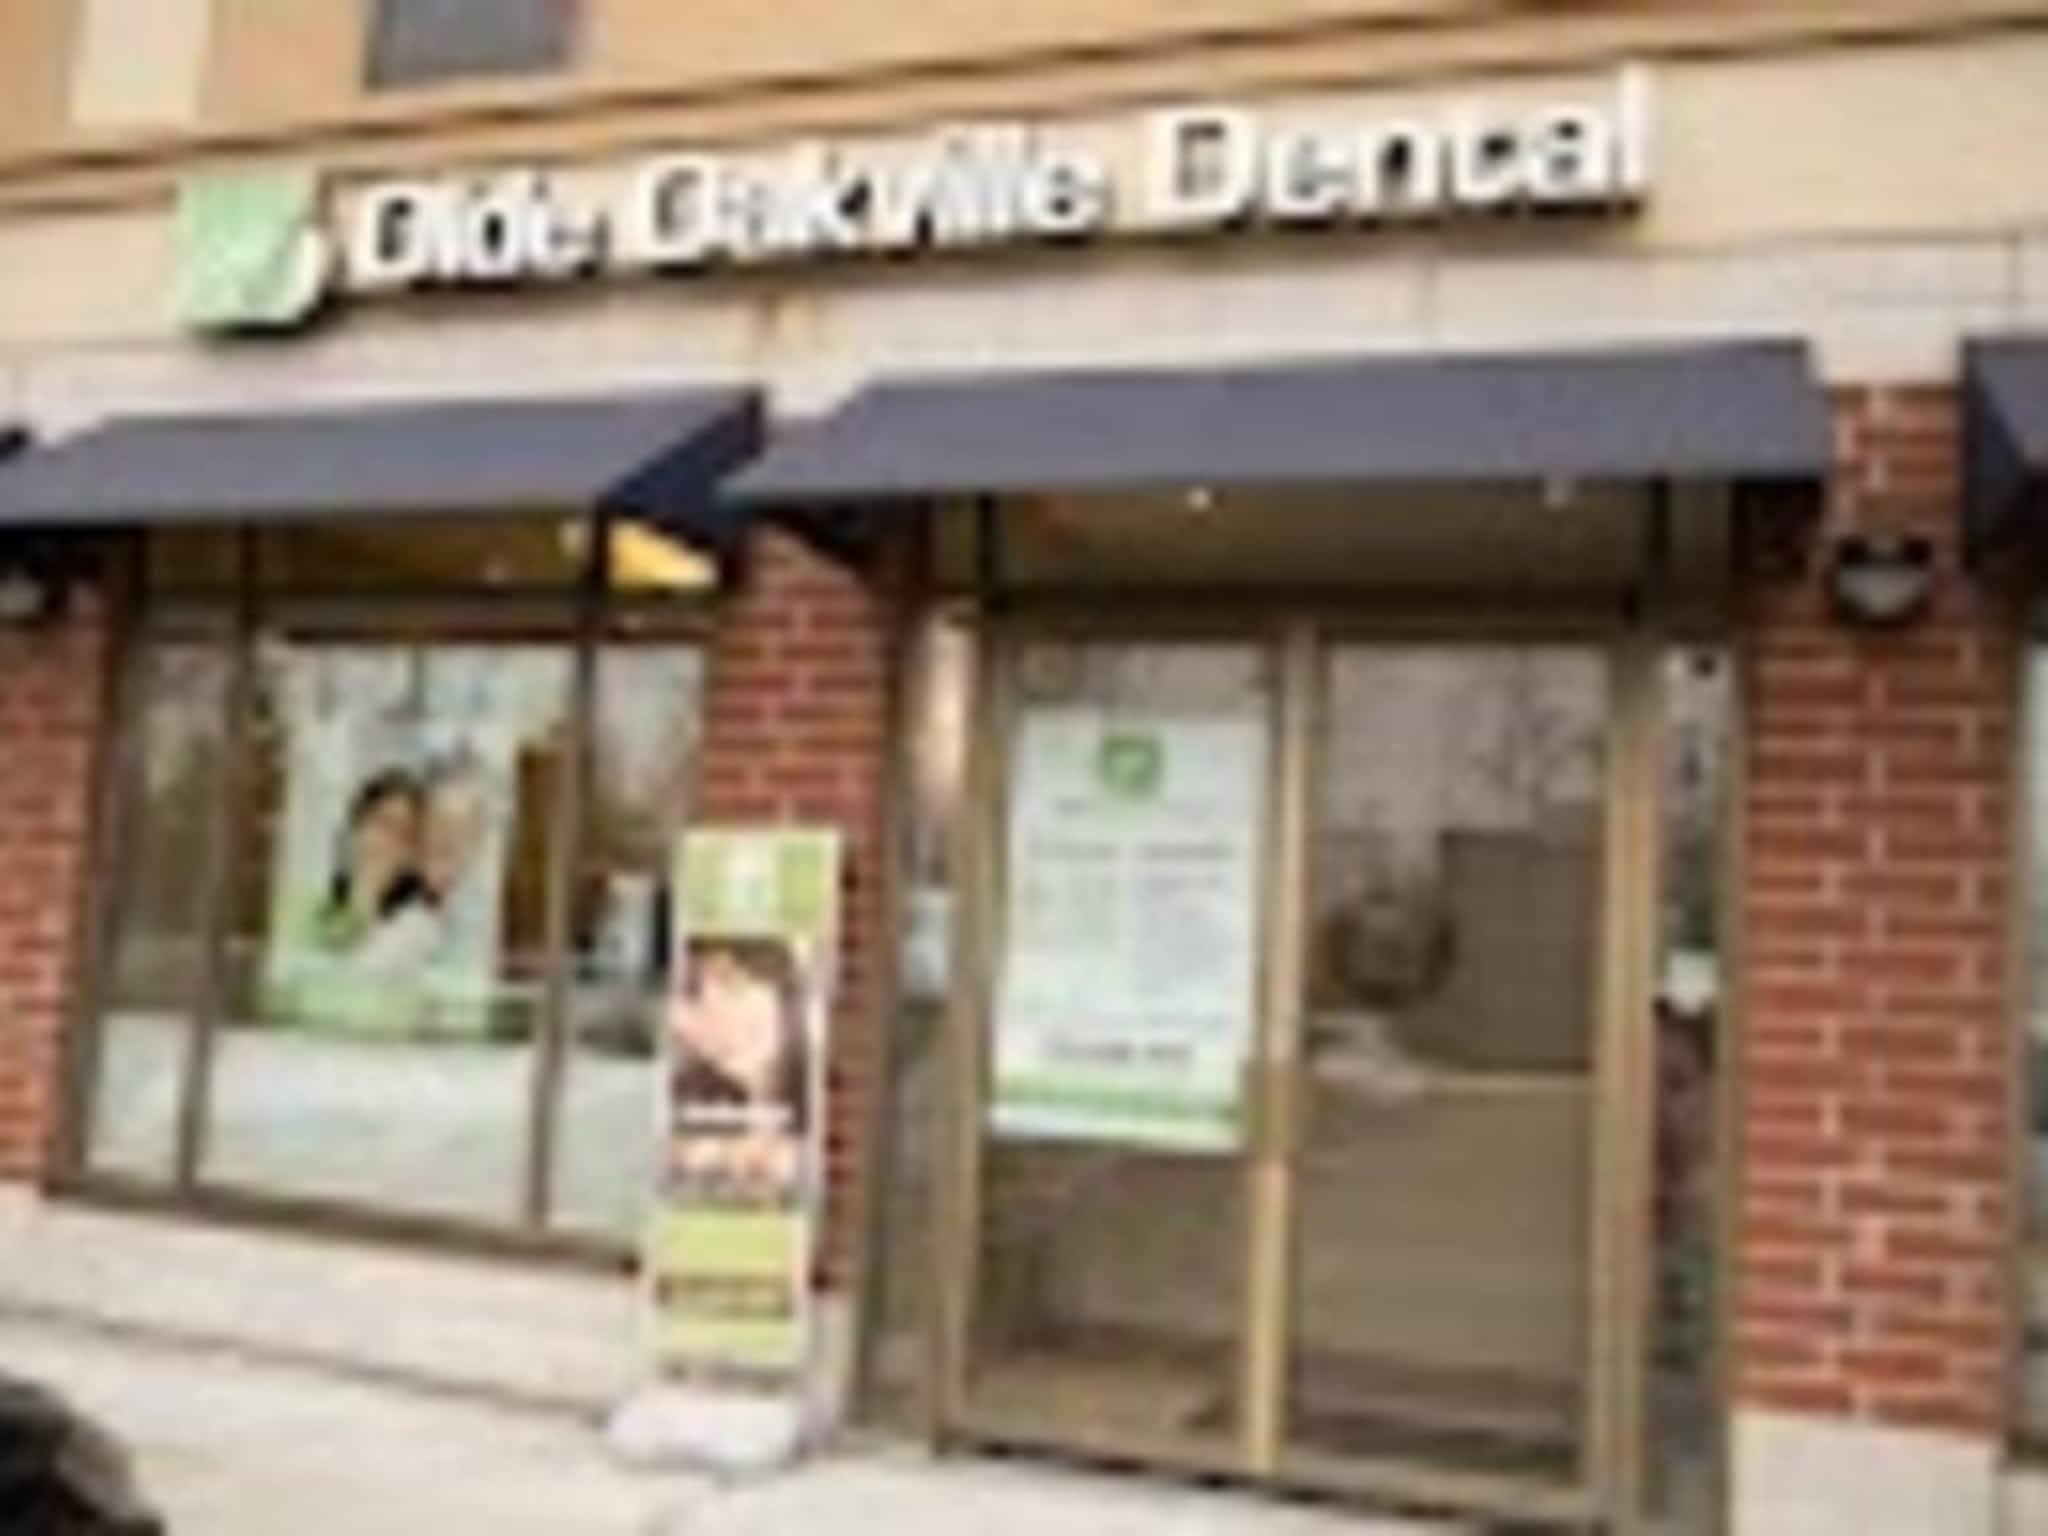 photo Olde Oakville Dental